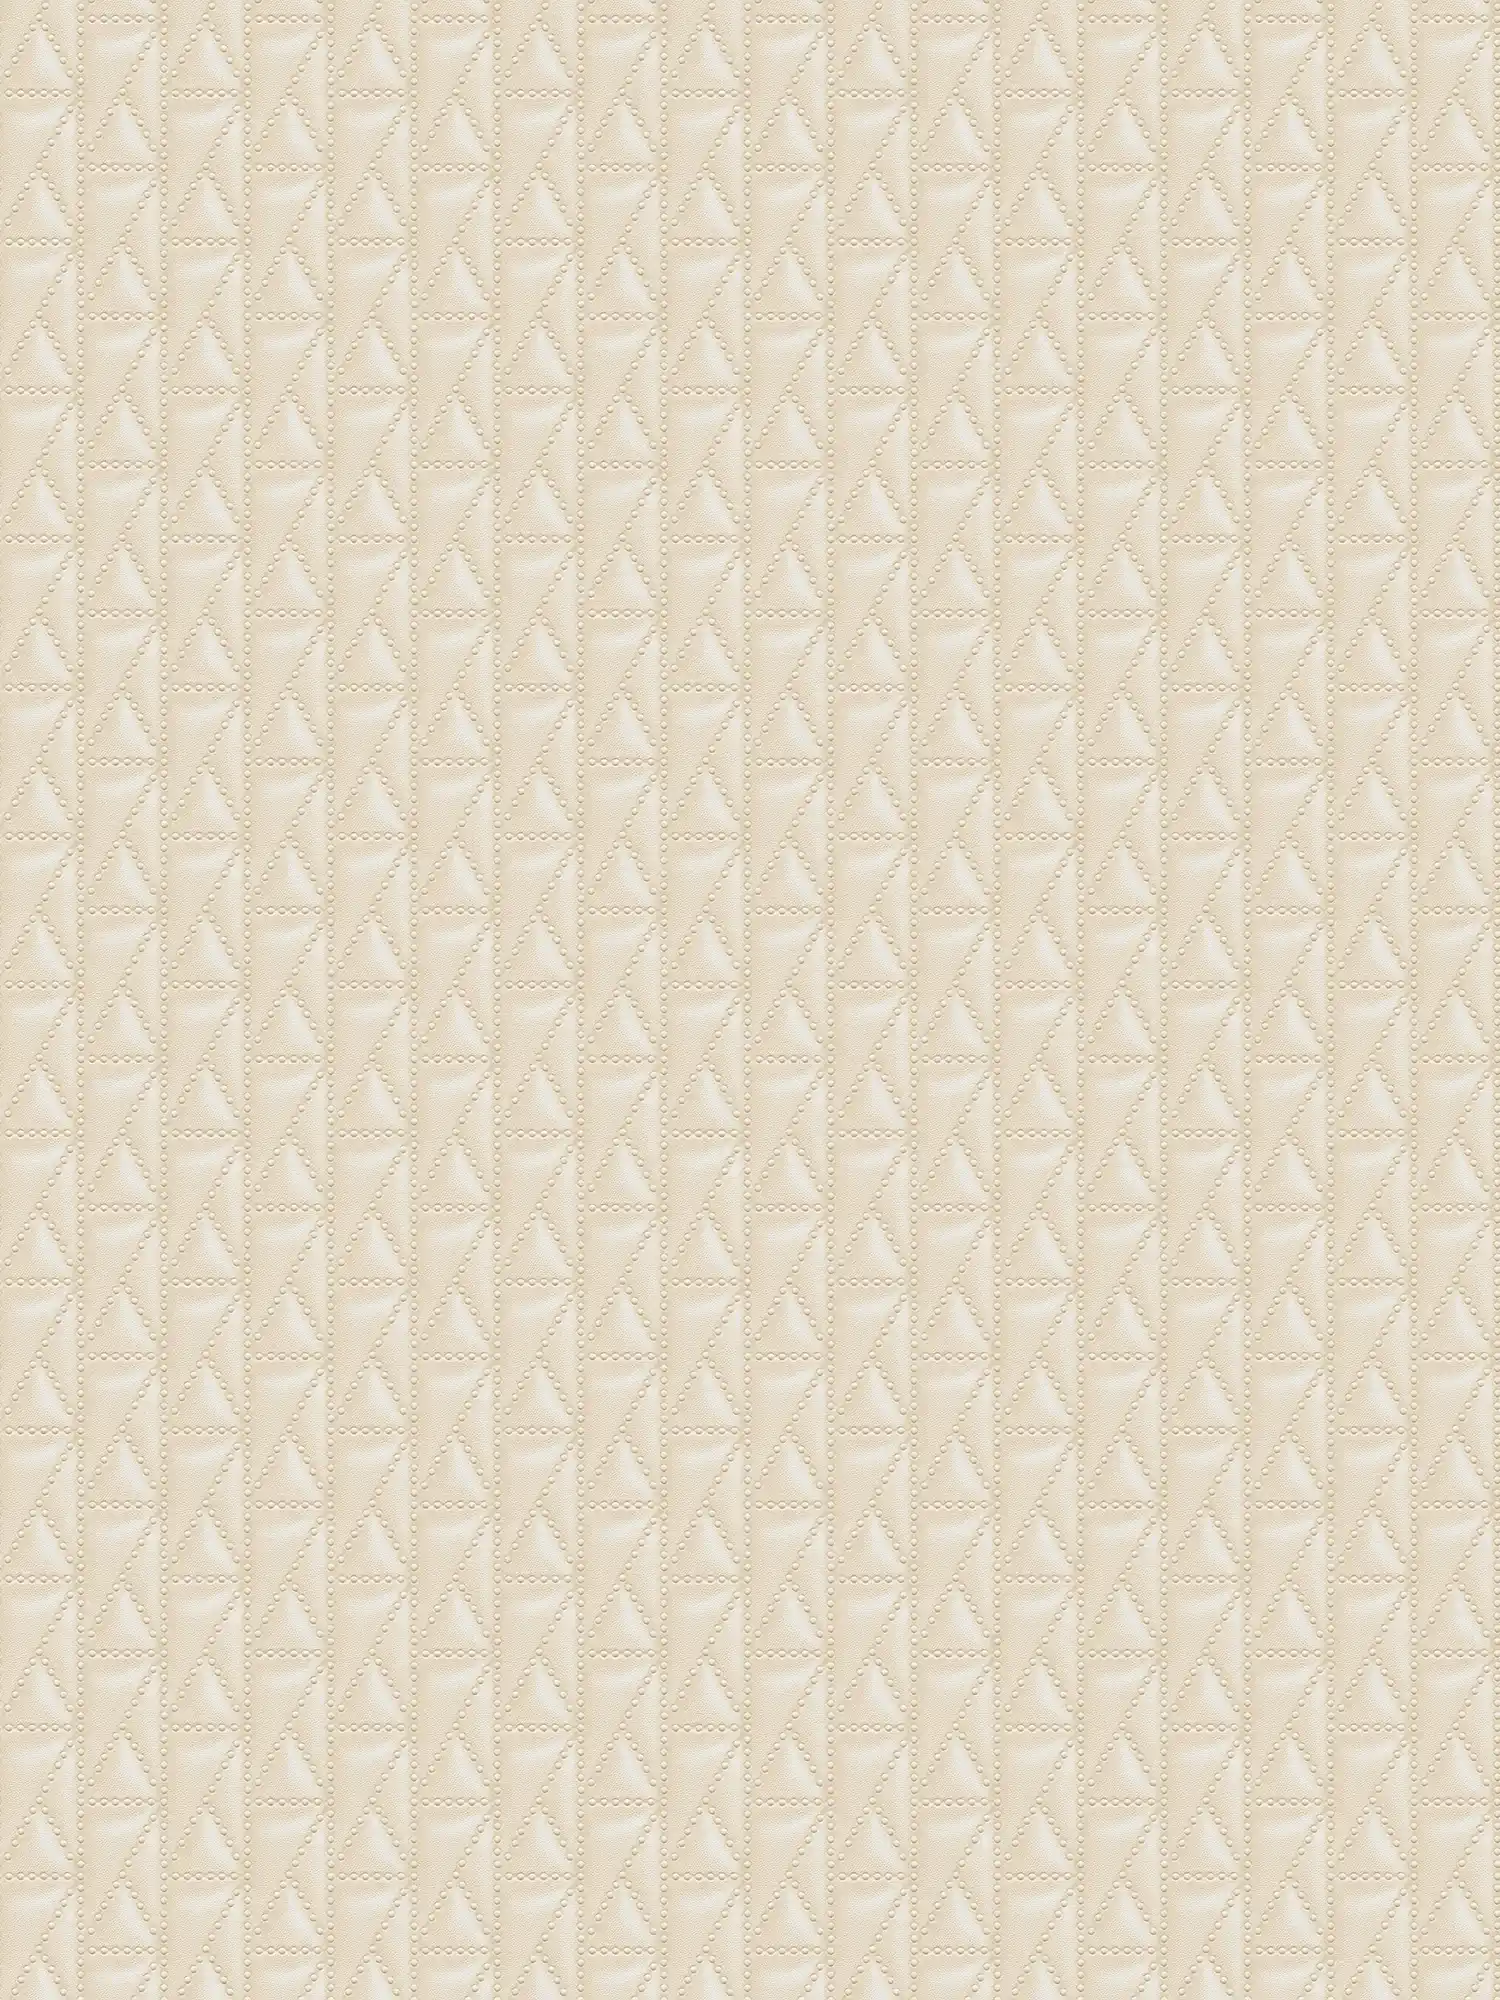 Karl LAGERFELD Papier peint Kuilted Bag Design - Beige, Crème
